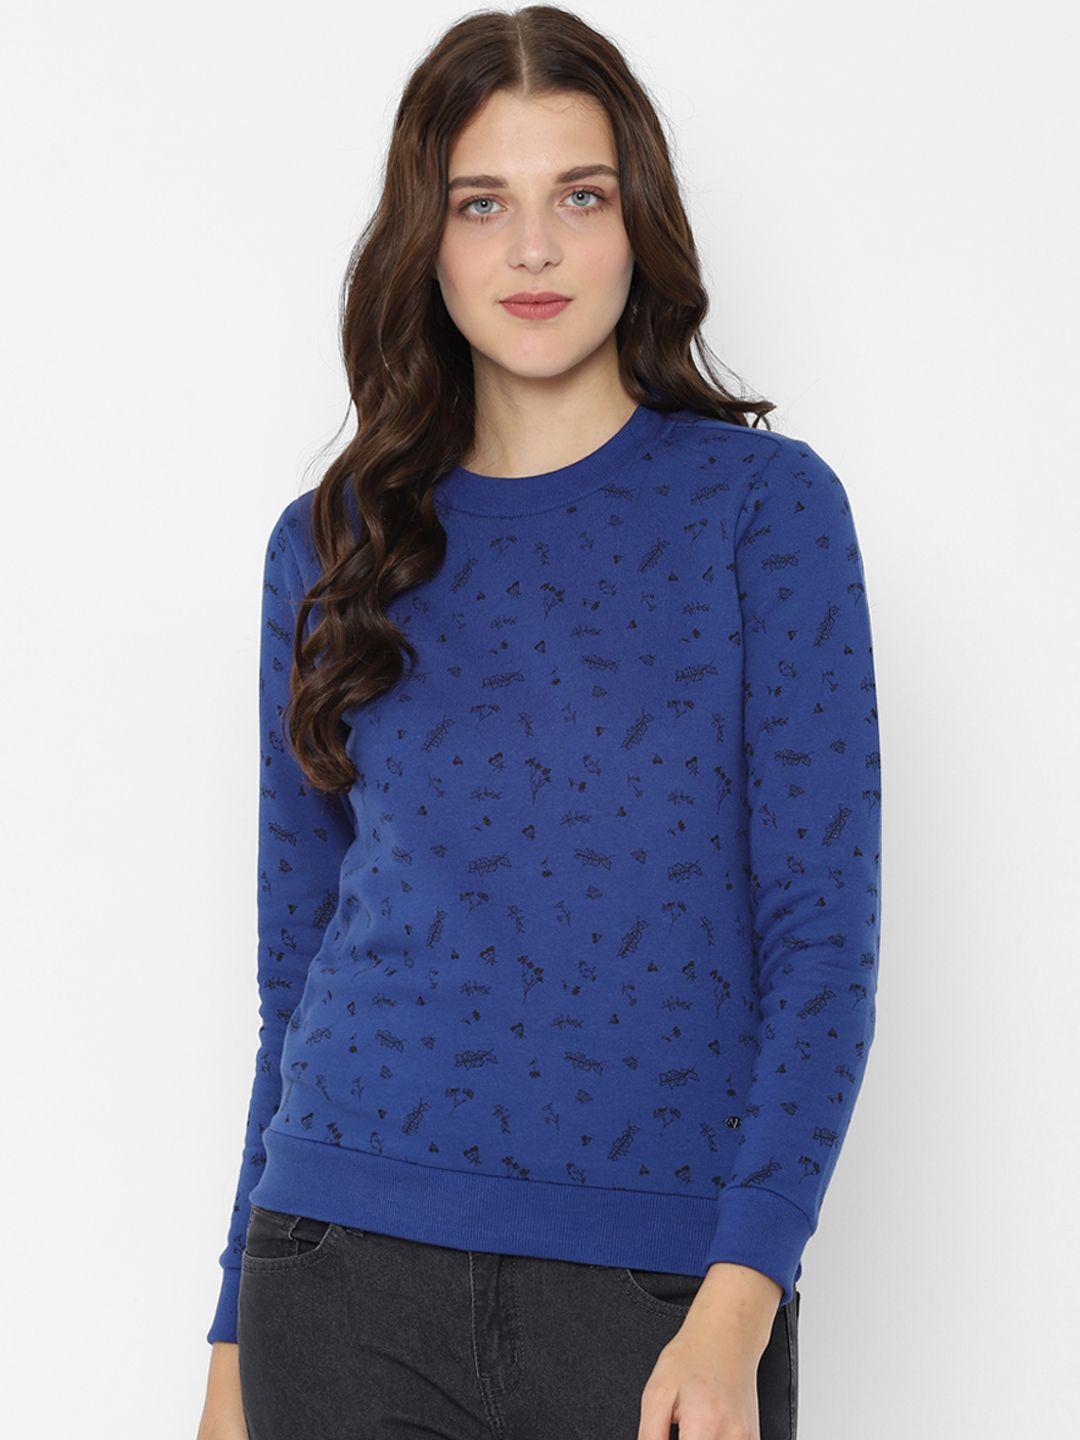 allen solly woman navy blue printed sweatshirt